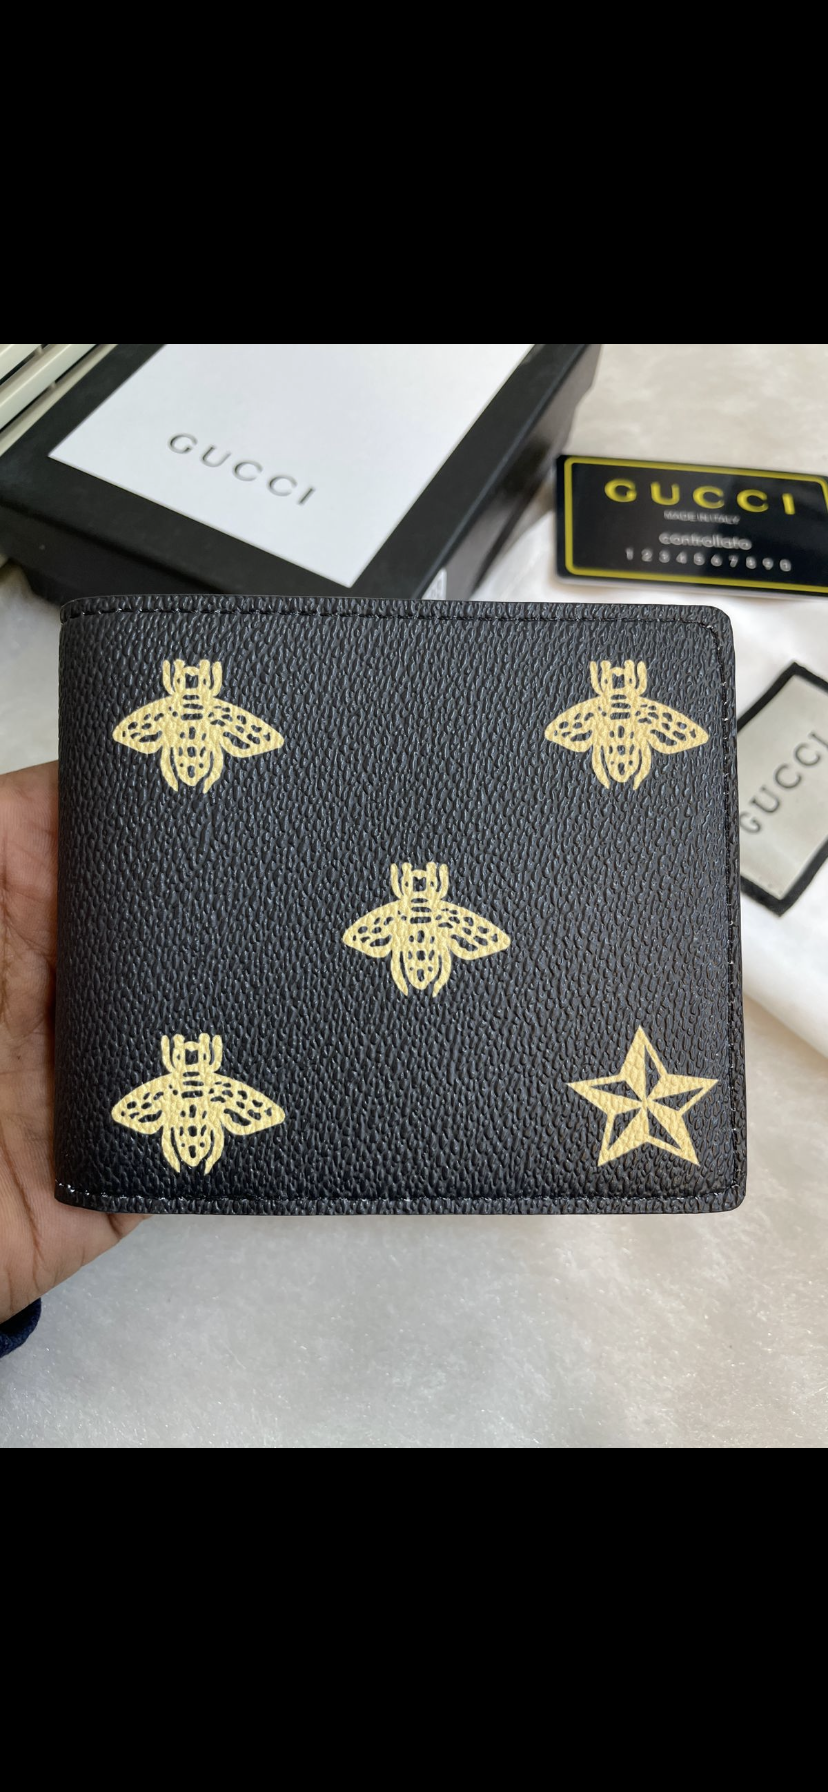 Cug Branded Luxury Italian Leather Men Wallet Model Silk Screen Bee Black 60223